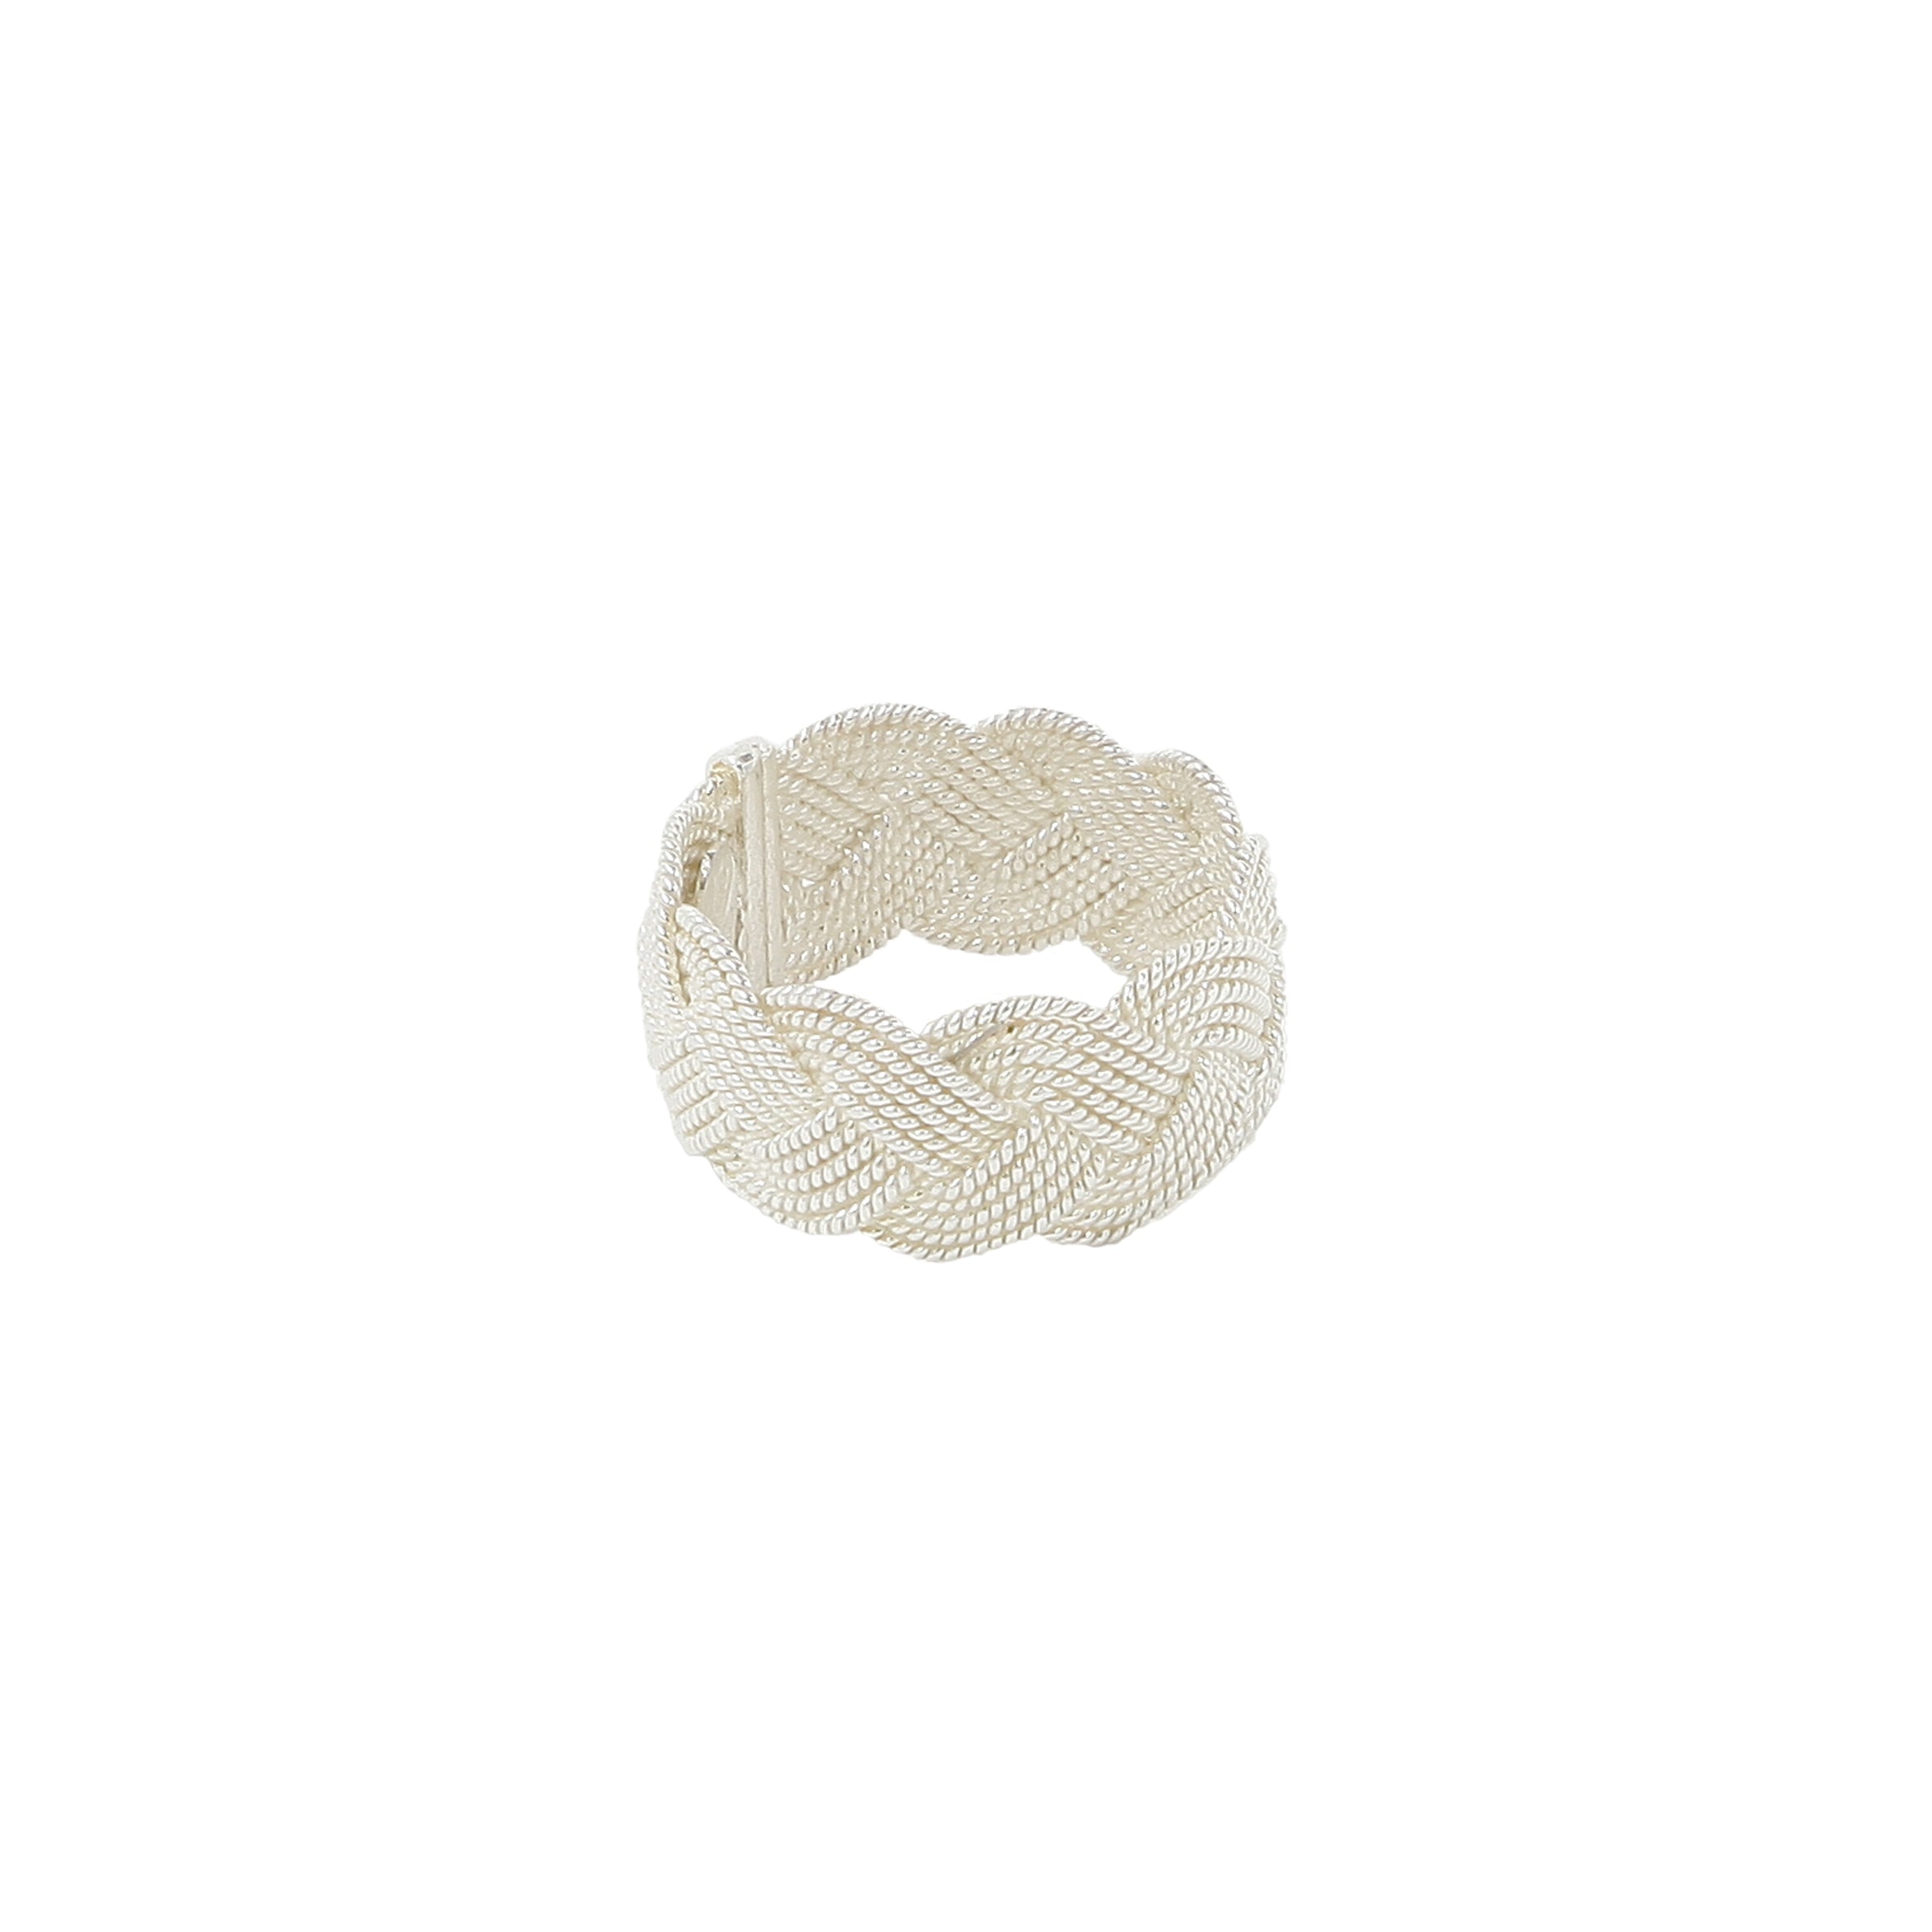 MAMAUDE ring - Filigree - Silver 925/1000 | MEA AYAYA                                